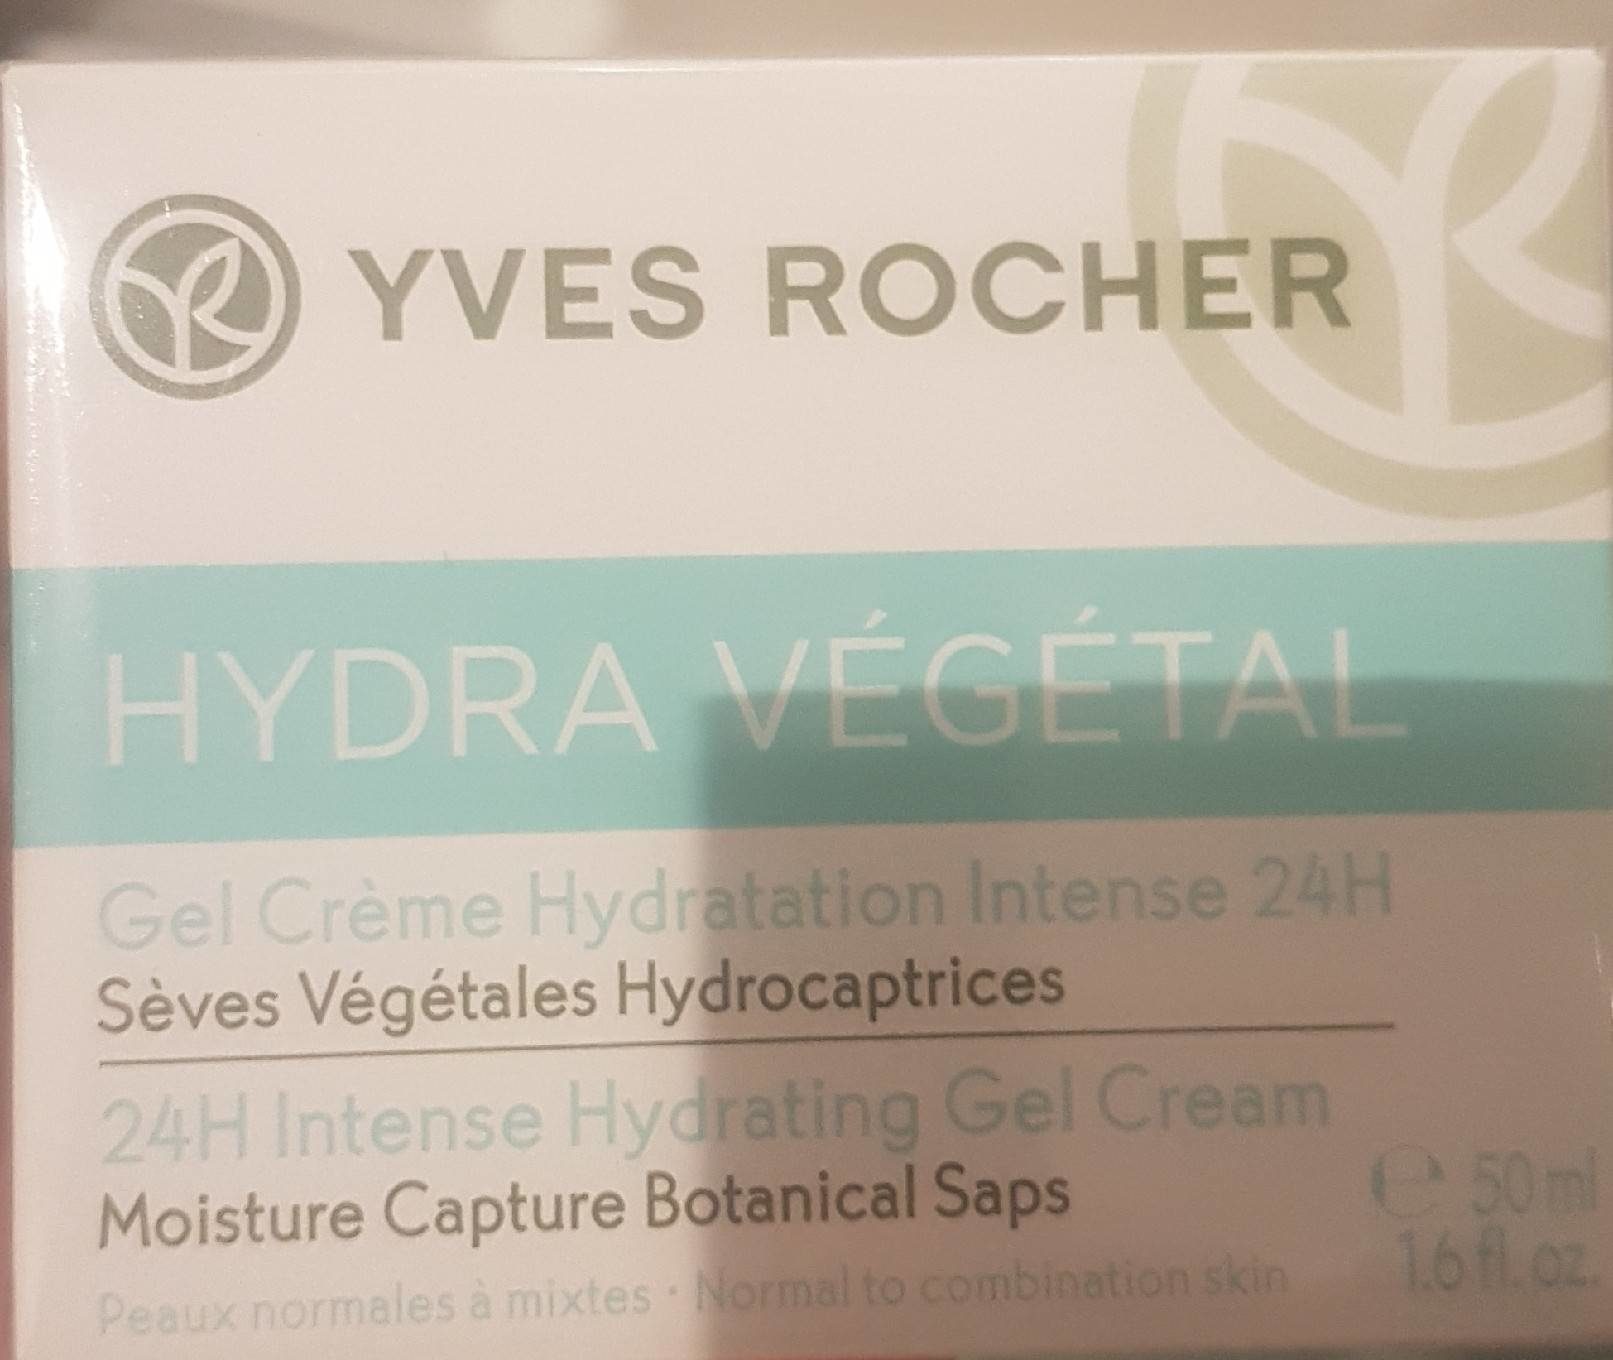 Yves Rocher Hydra Vegetal Creme Hydrating Gel Cream - Produit - fr